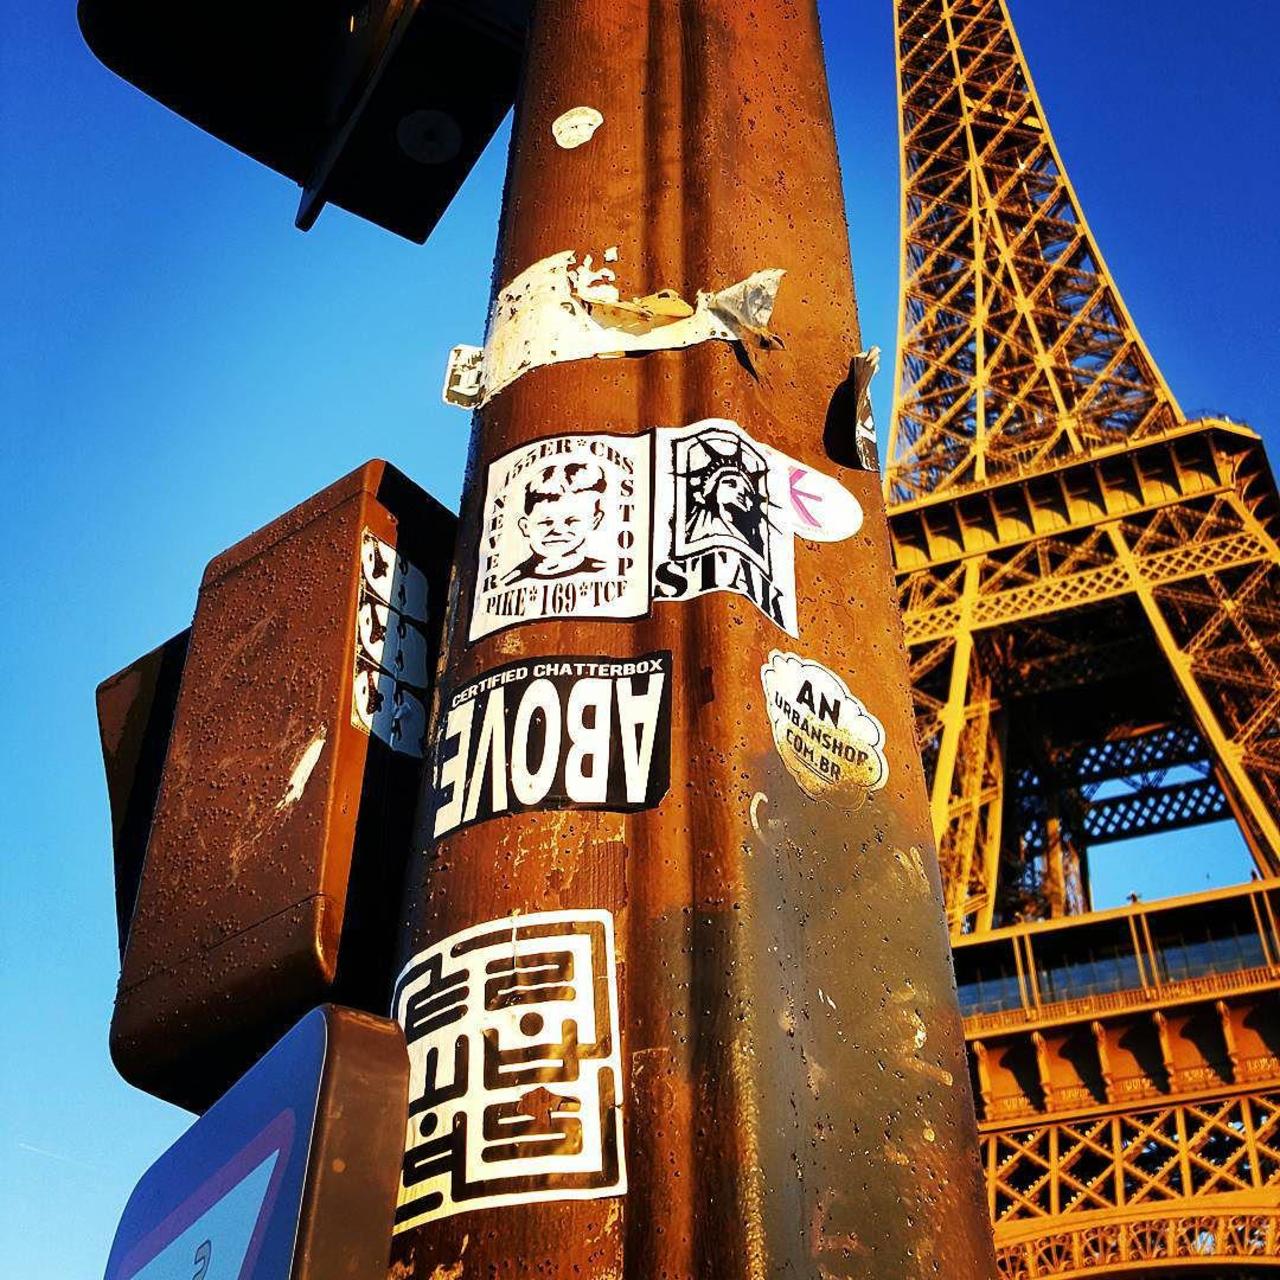 #Paris #graffiti photo by @the169 http://ift.tt/1hiVsRK #StreetArt http://t.co/Z63jc9lNdR